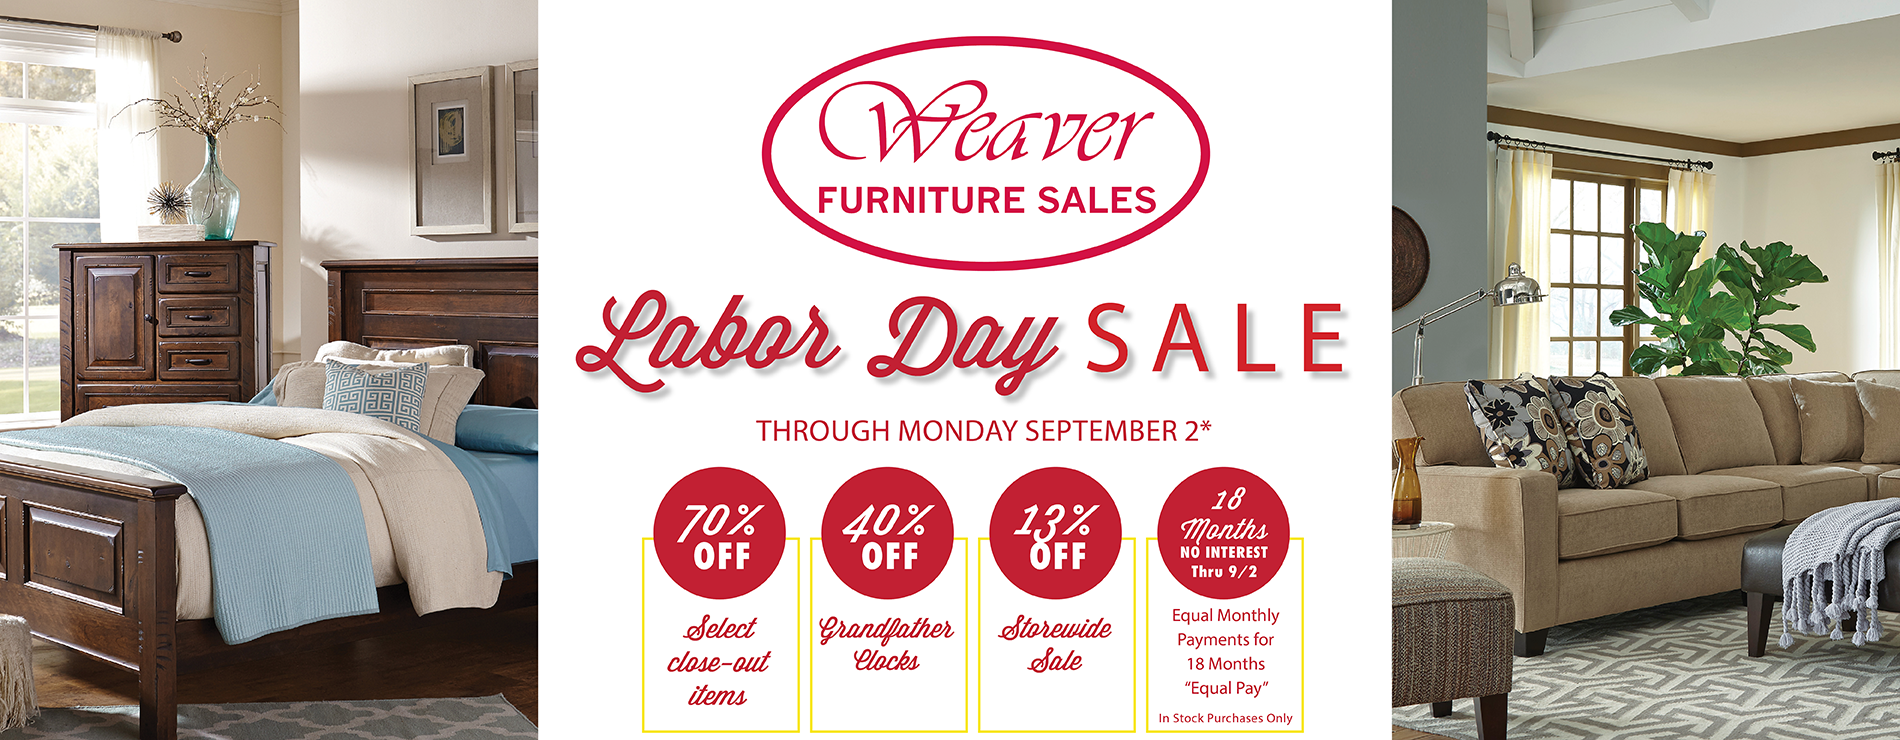 Weaver Labor Day Sale 13% Off Storewide - Weaver Furniture Sales